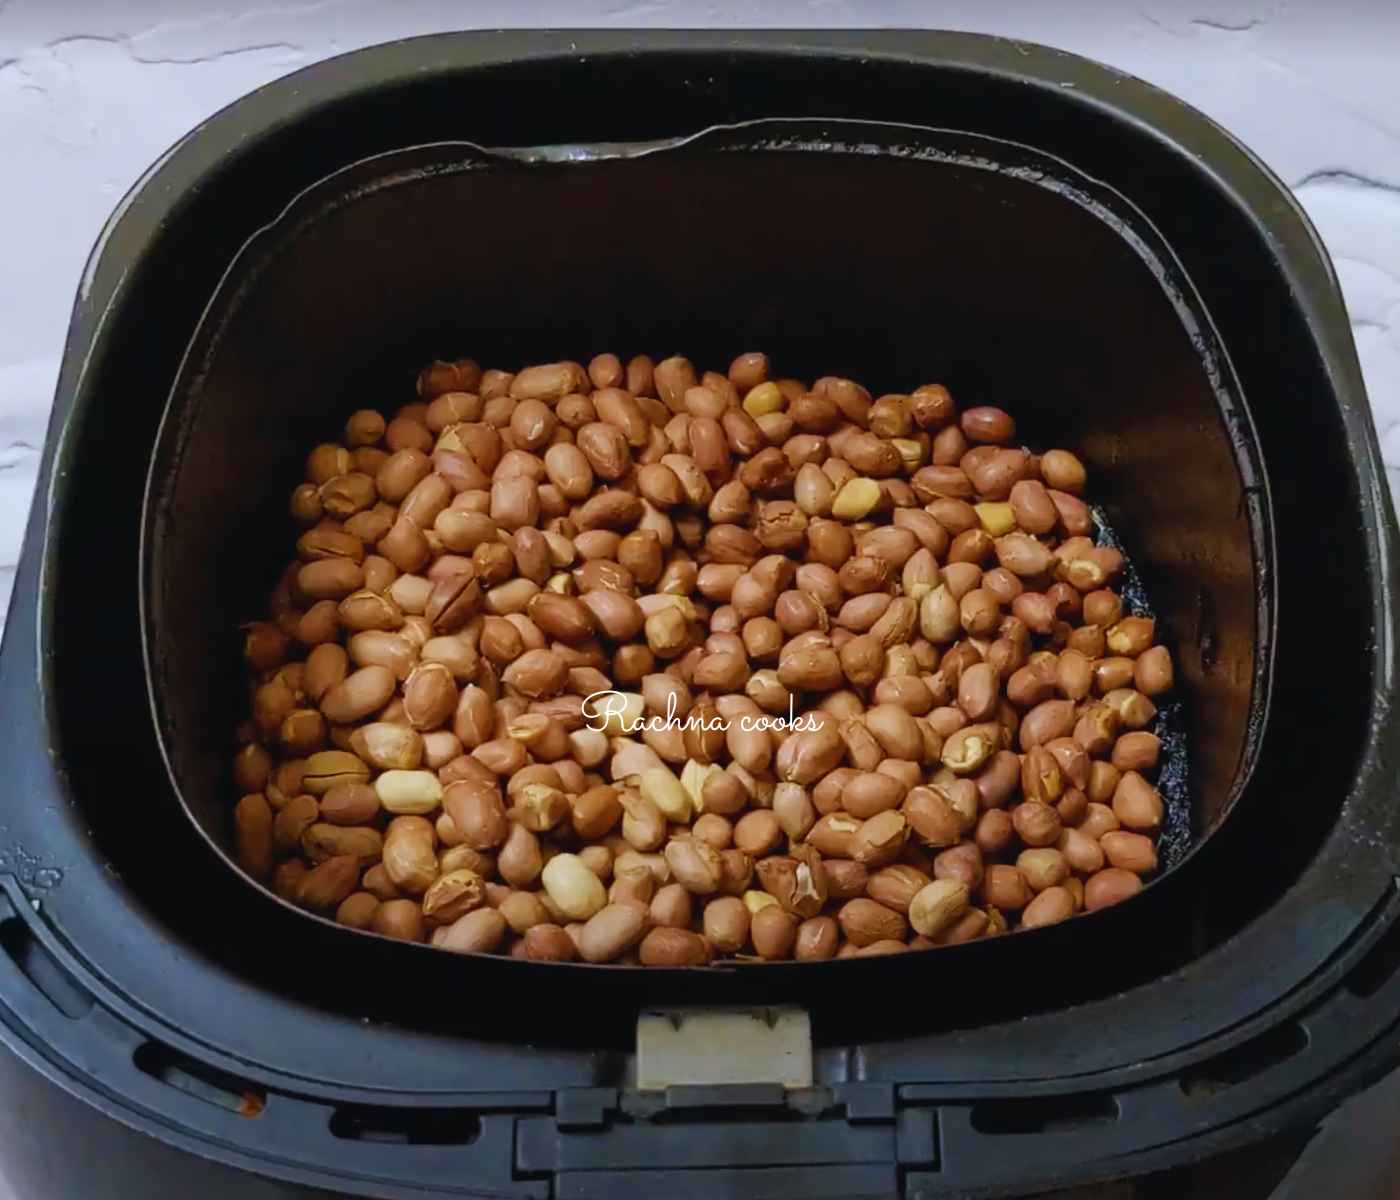 Browned peanuts after air frying in air fryer basket.